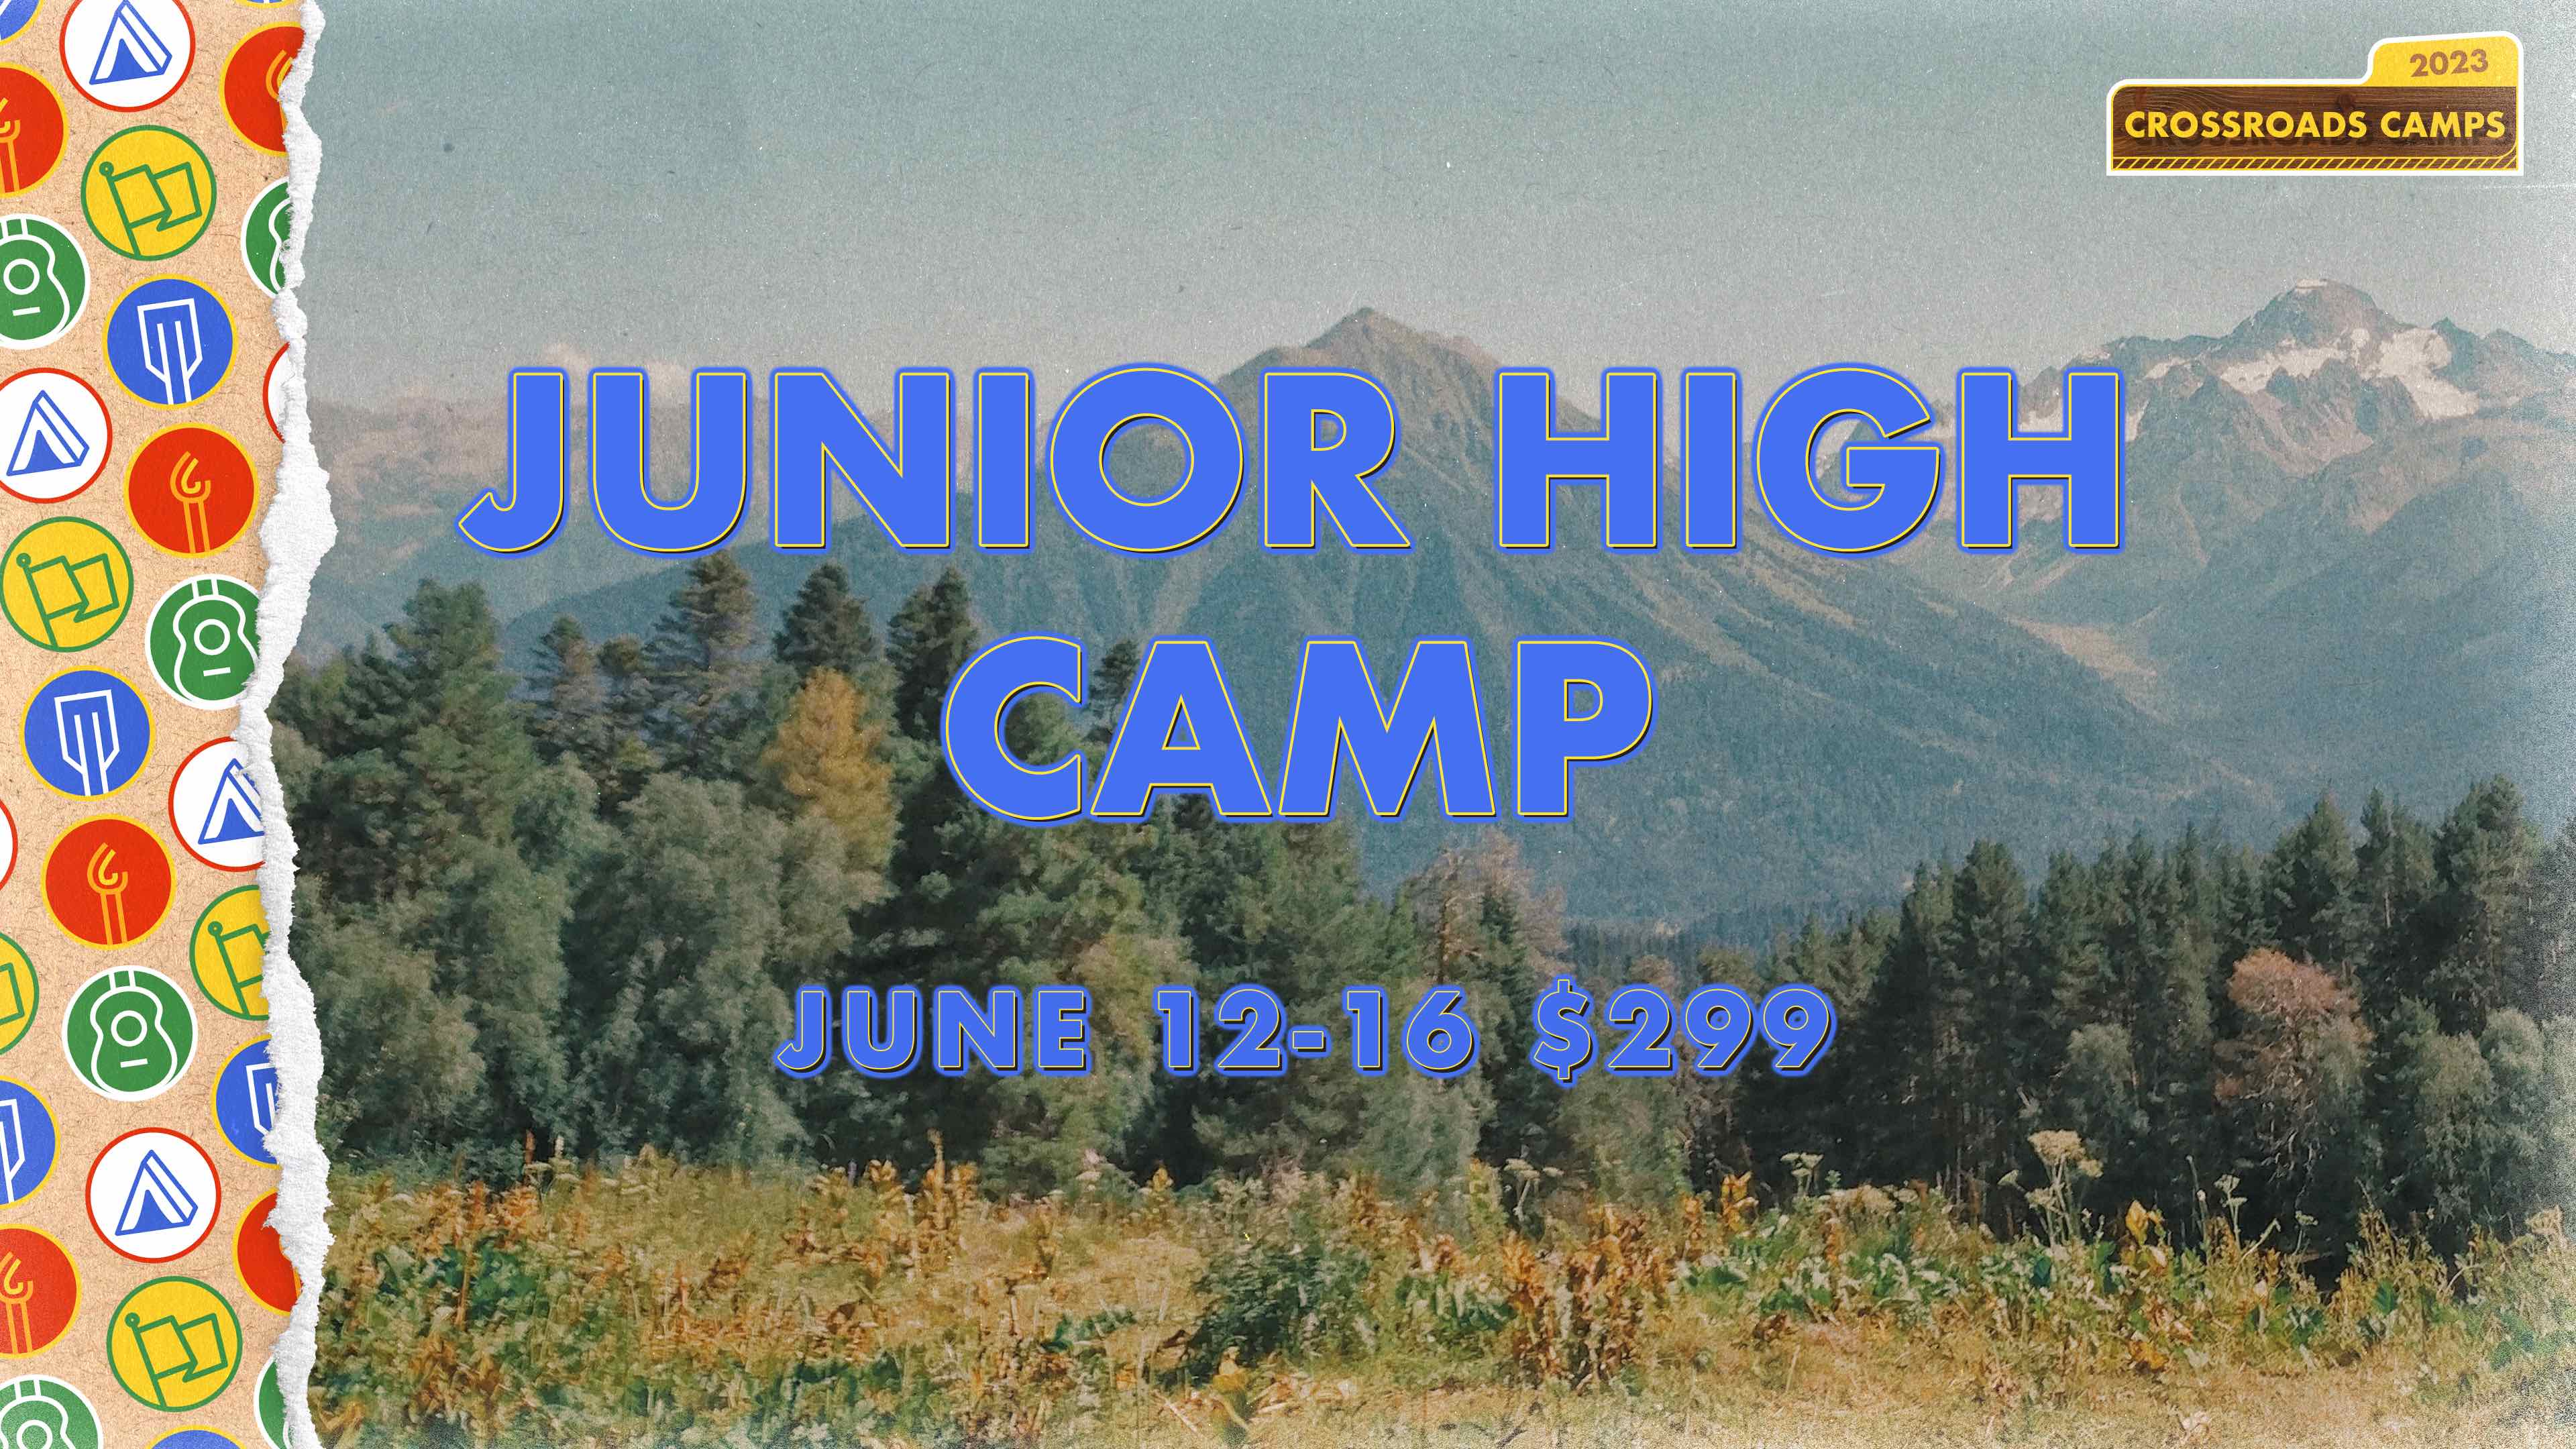 Jr High Camp Promo